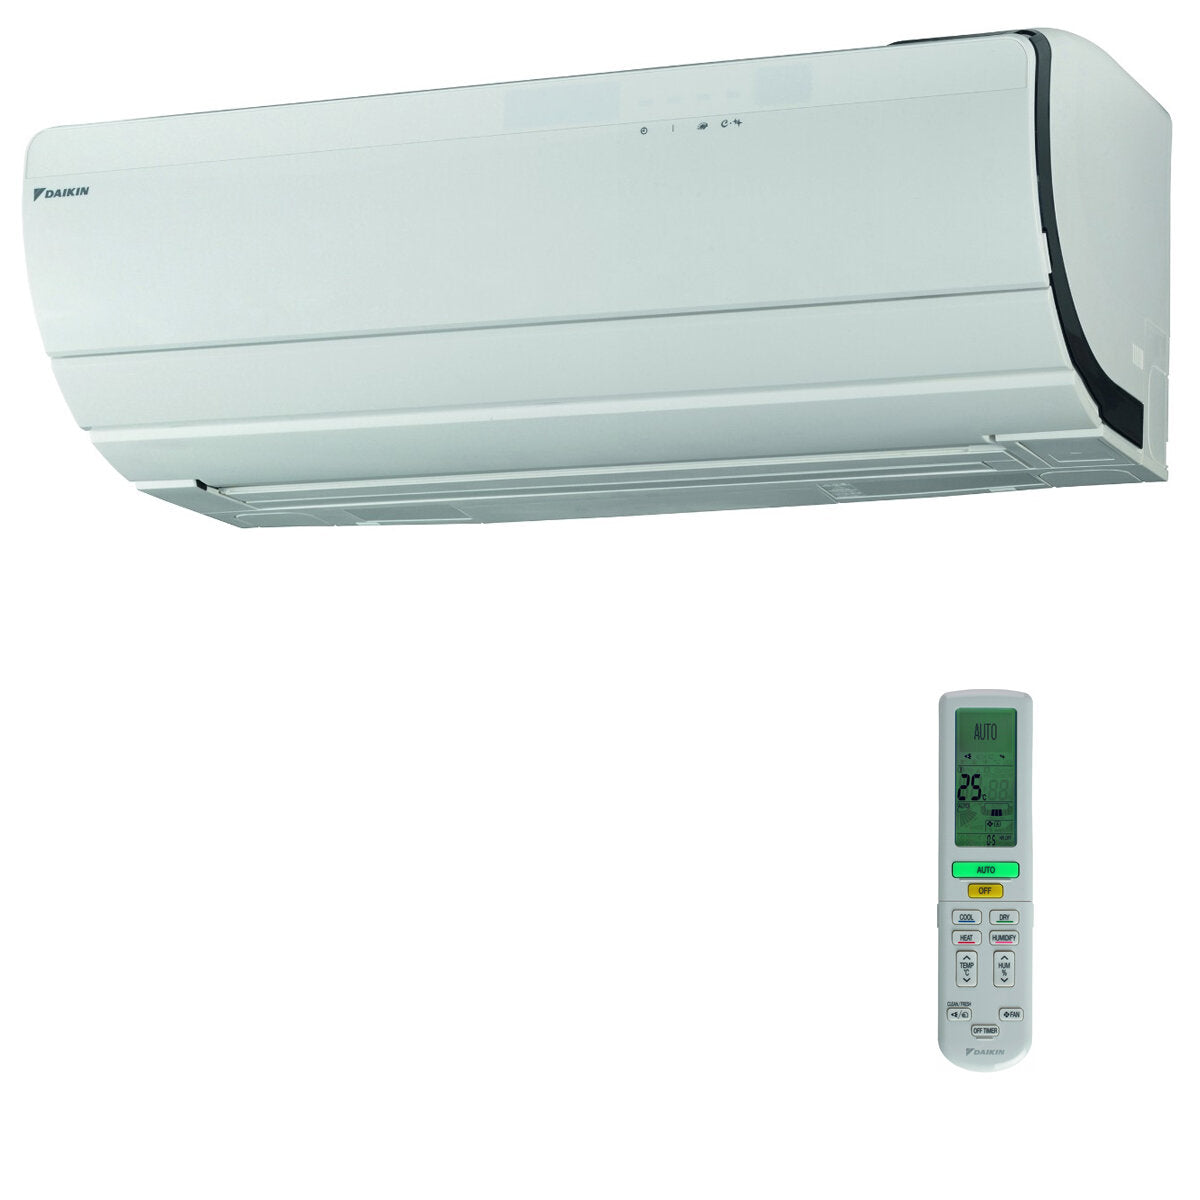 Daikin Ururu Sarara air conditioner 18000 BTU R32 inverter A +++